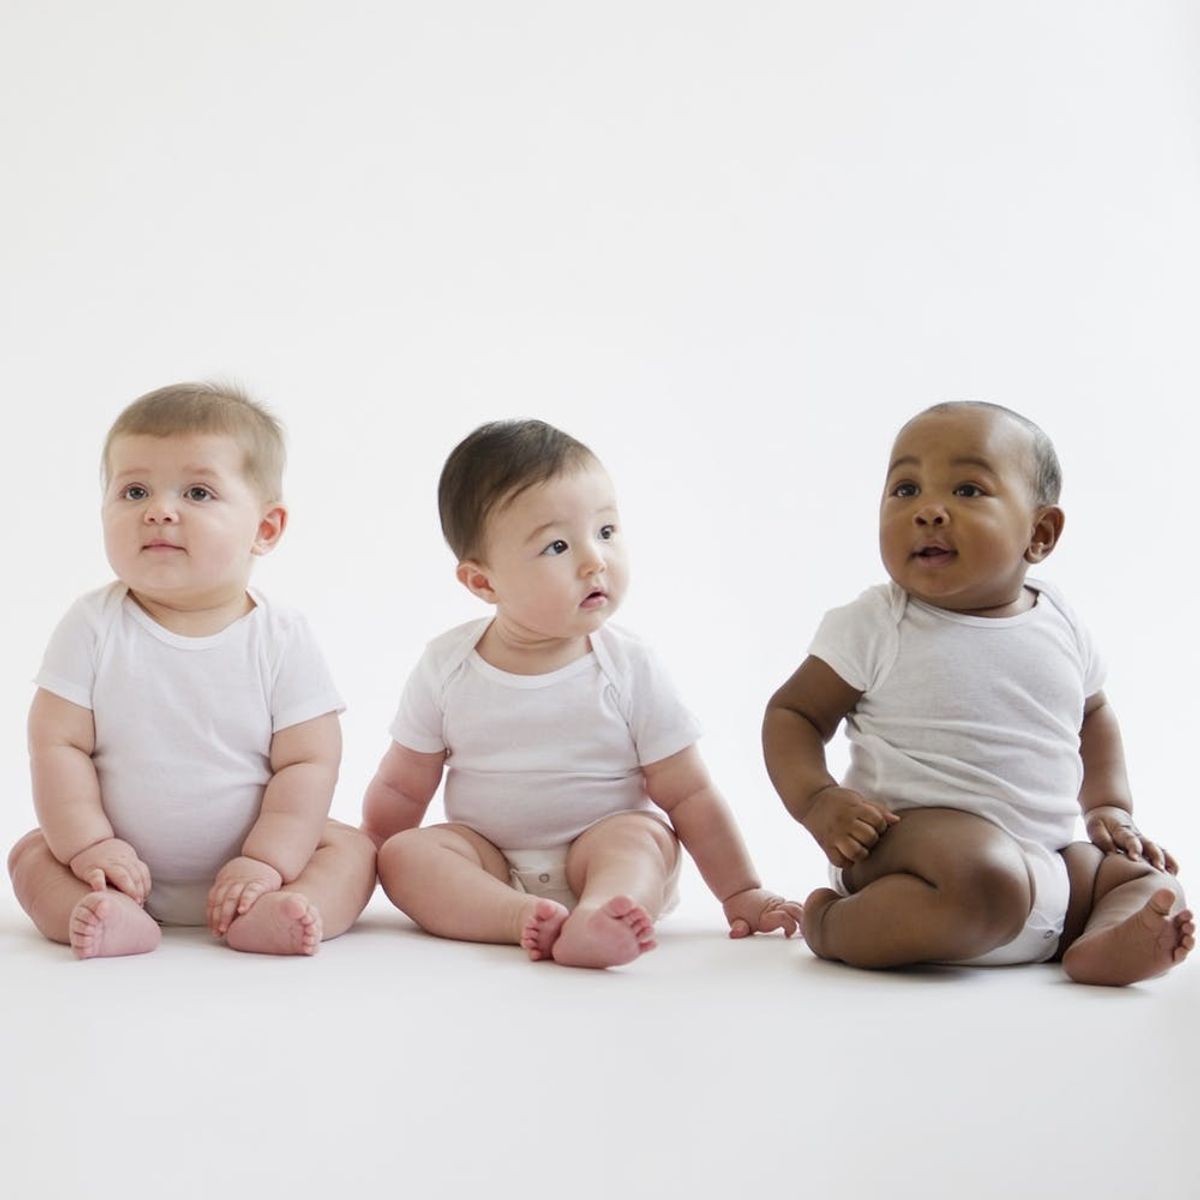 10 Fresh Gender-Neutral Baby Names